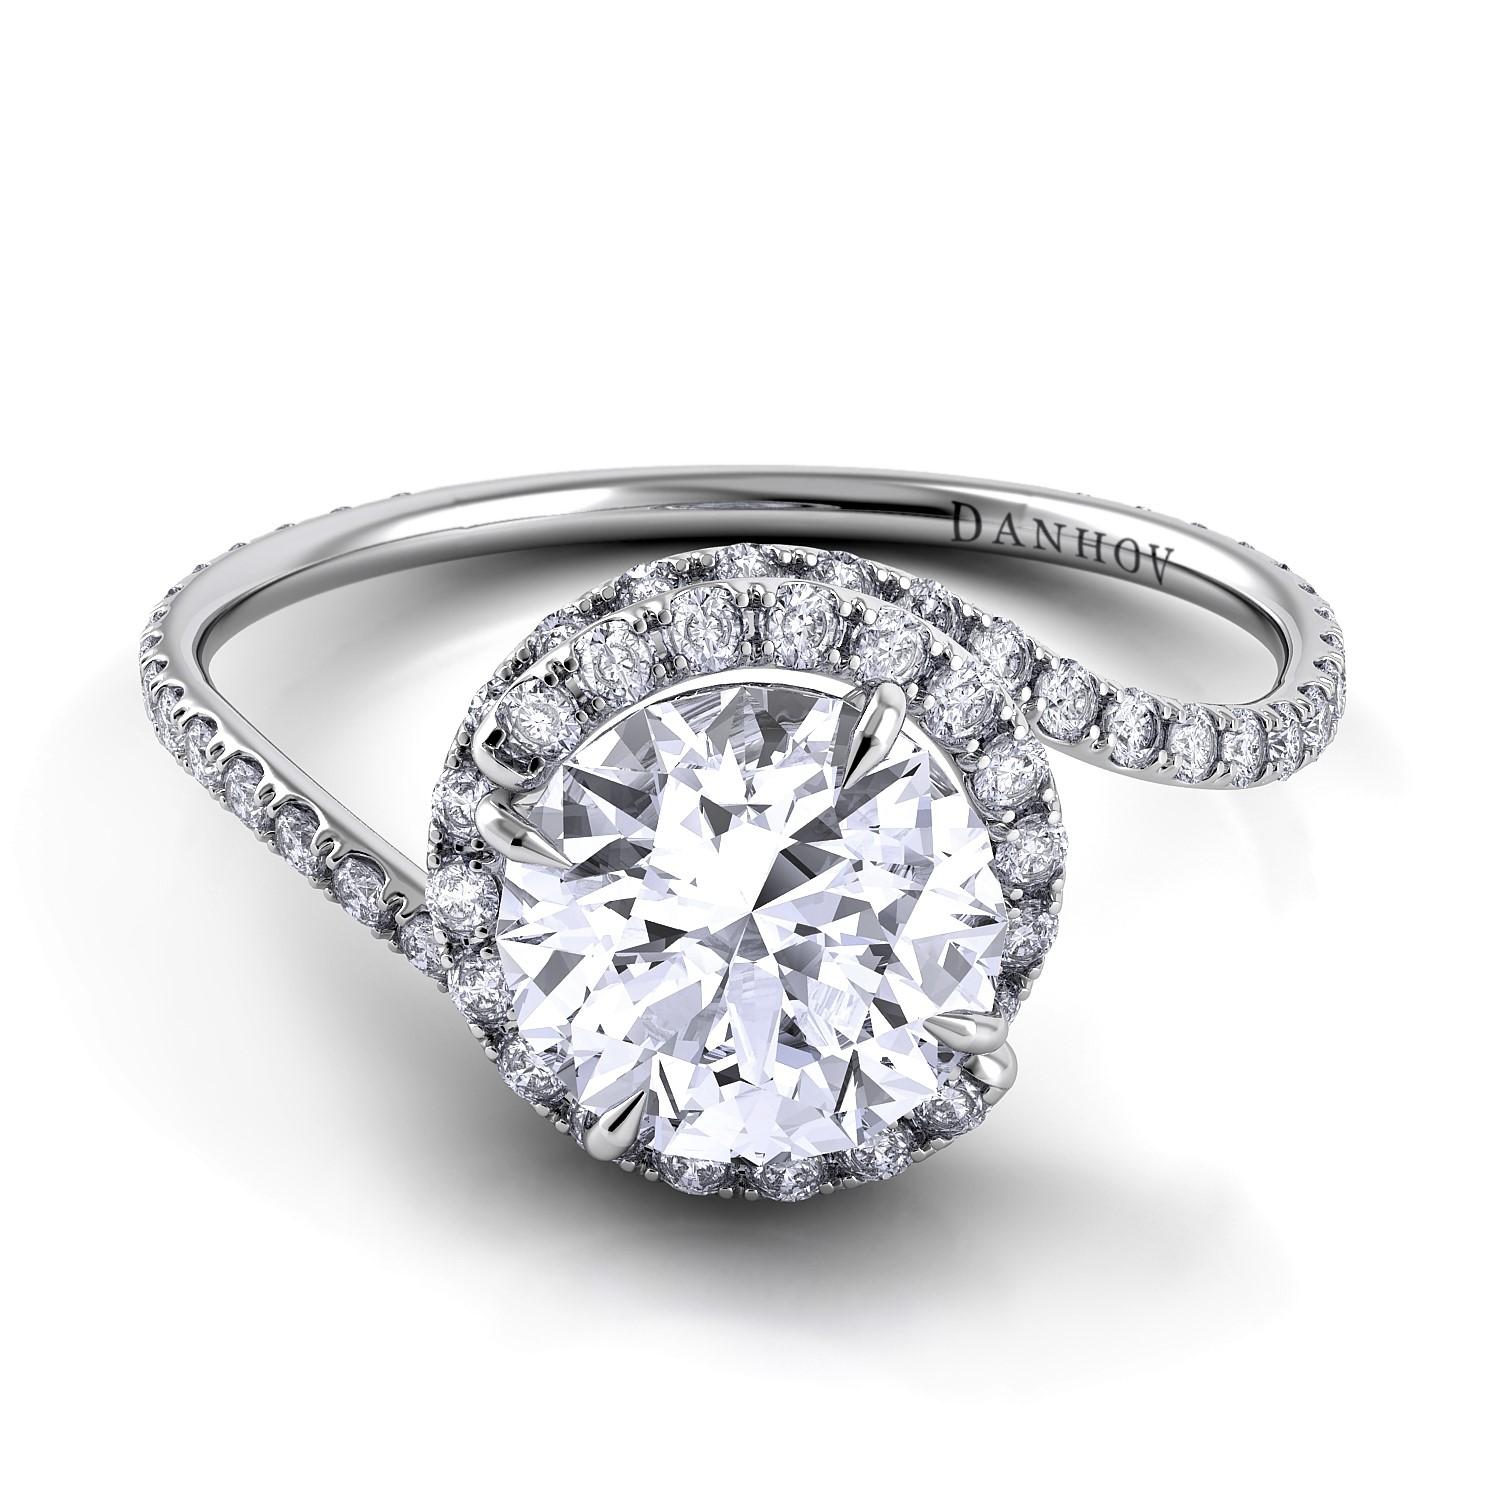 Danhov Abbraccio Award Winning Swirl Diamond Engagement Ring 'AE-100' For Sale 2